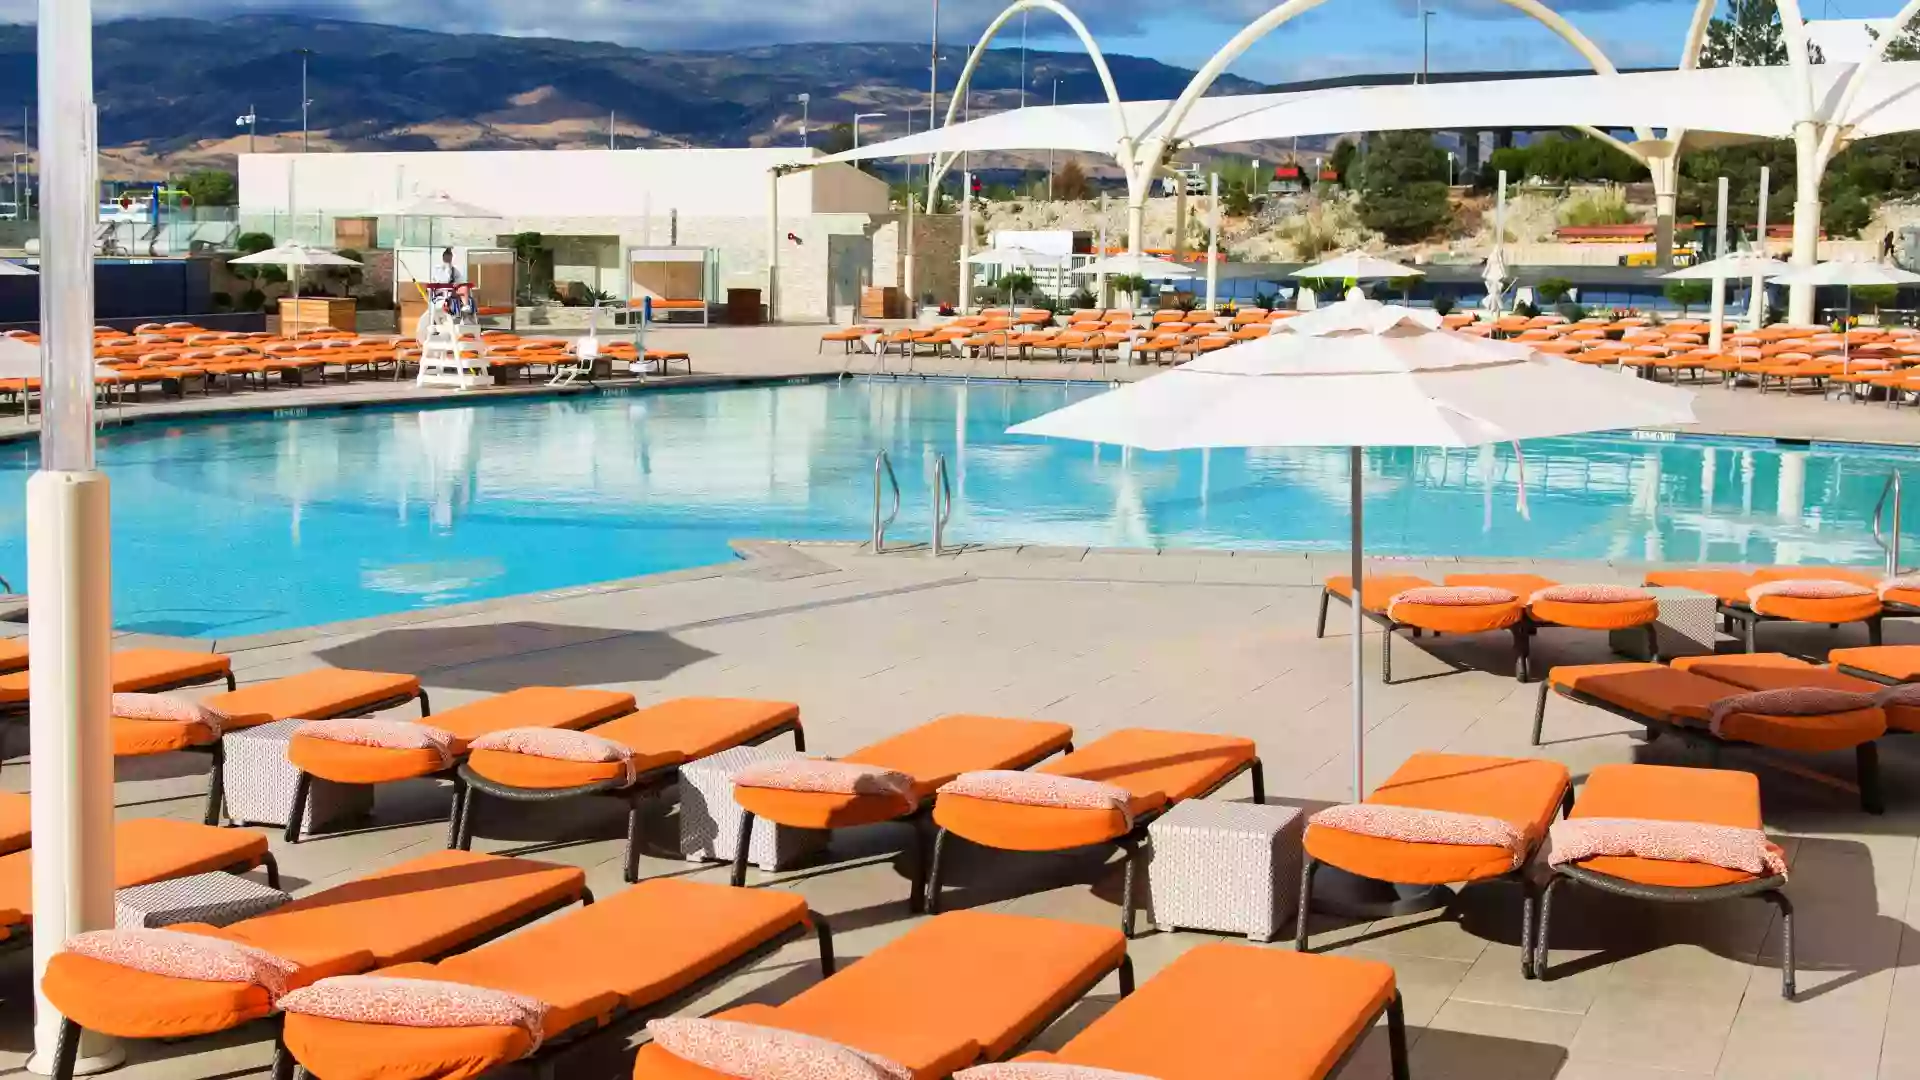 The Pool at Grand Sierra Resort